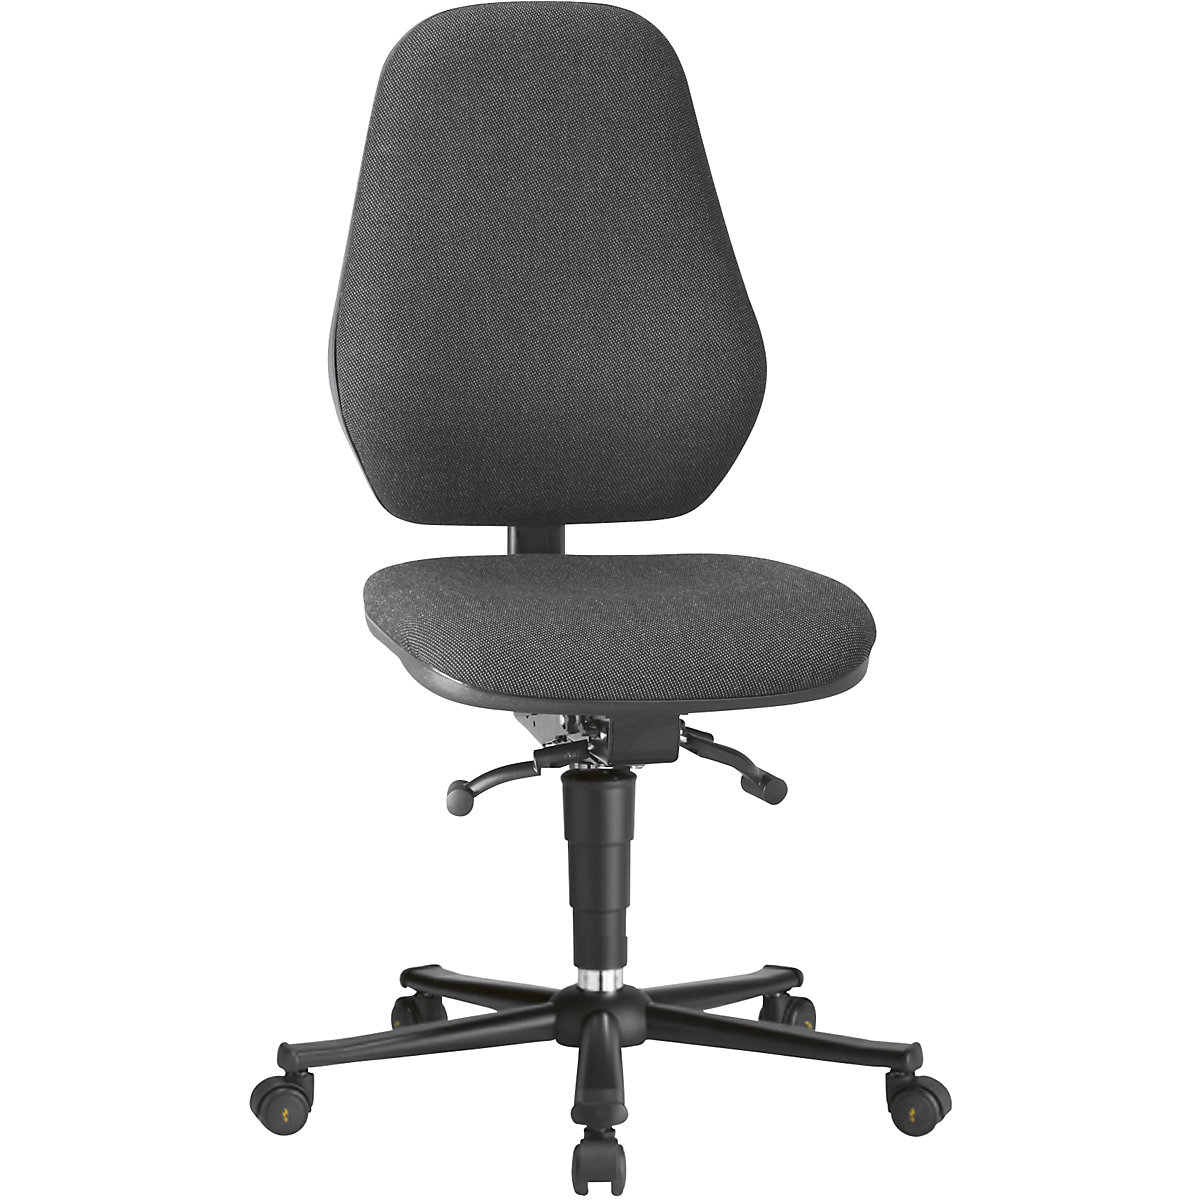 Pracovní otočná židle – bimos, s ochranou ESD, se synchronní mechanikou a regulací hmotnosti, s kolečky, černý látkový potah-5